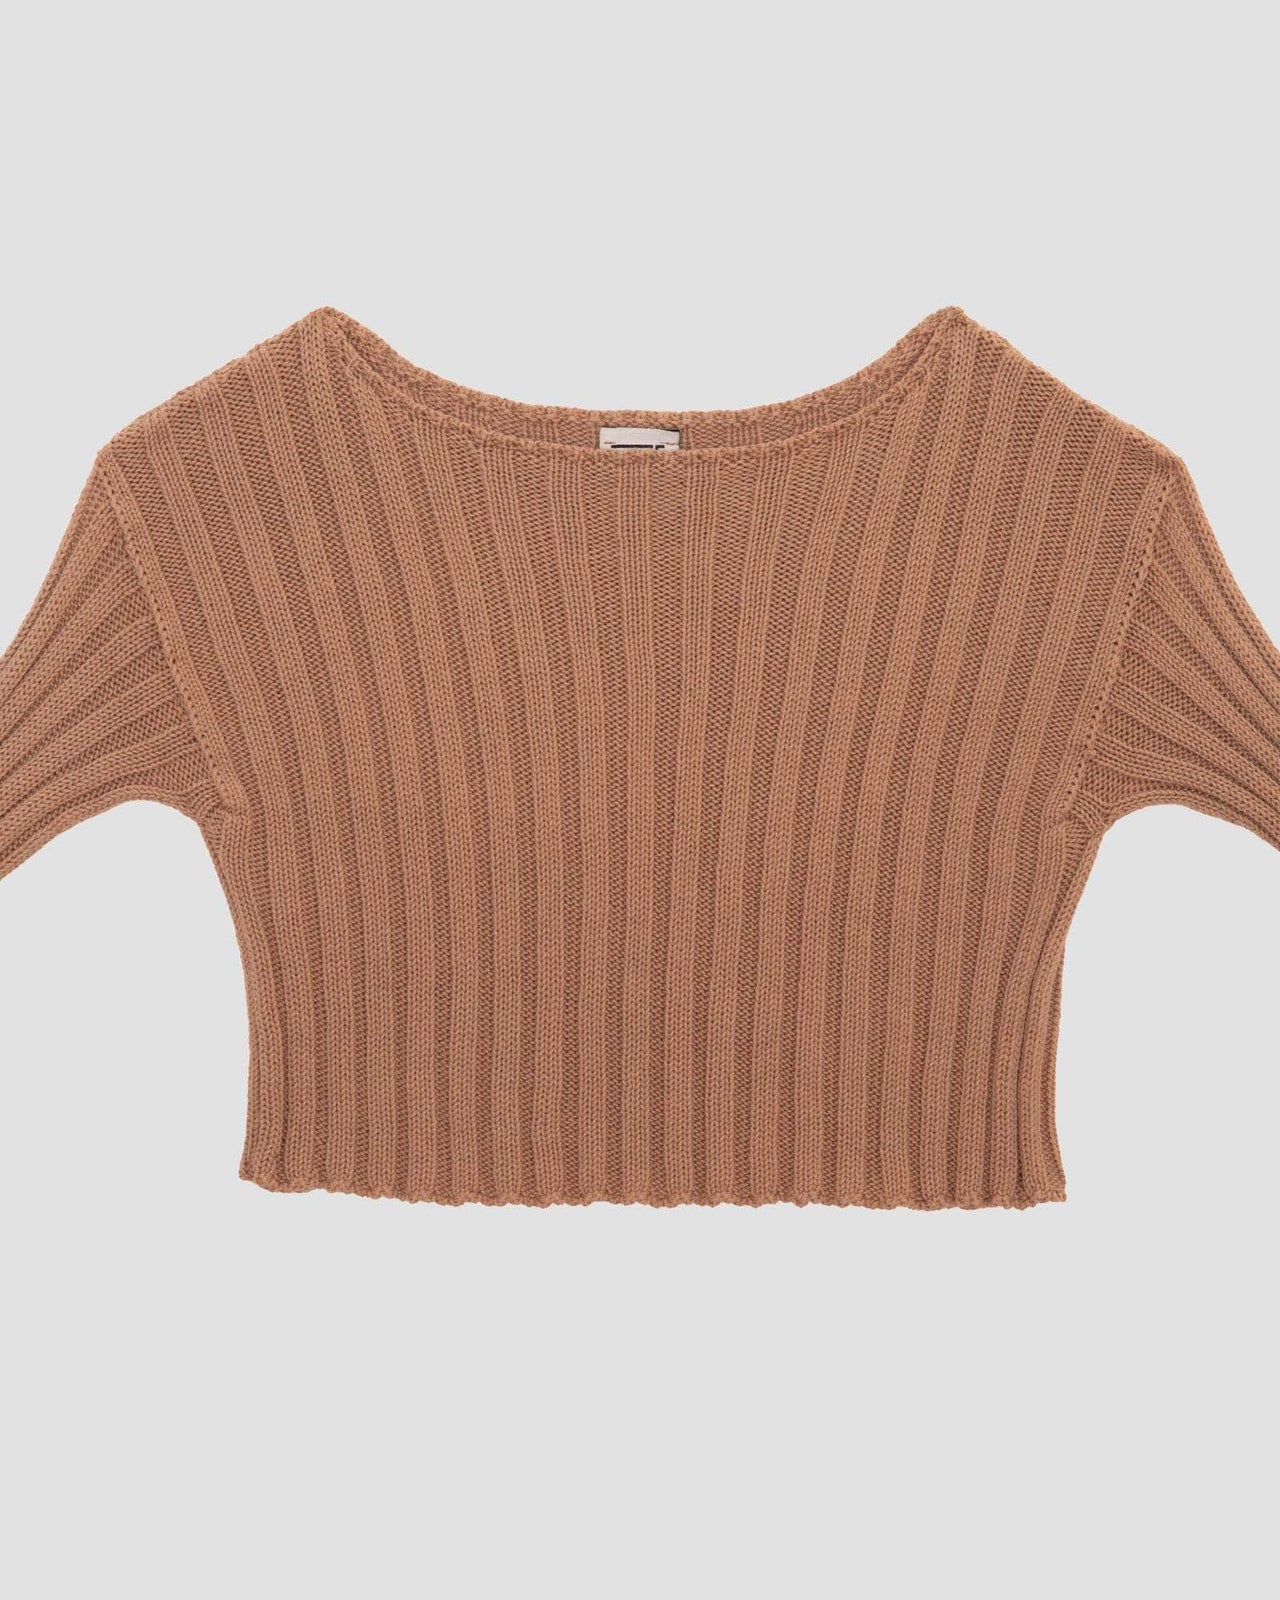 Macau Sweater in assortment | Organic cotton knit | en | バセランジュ